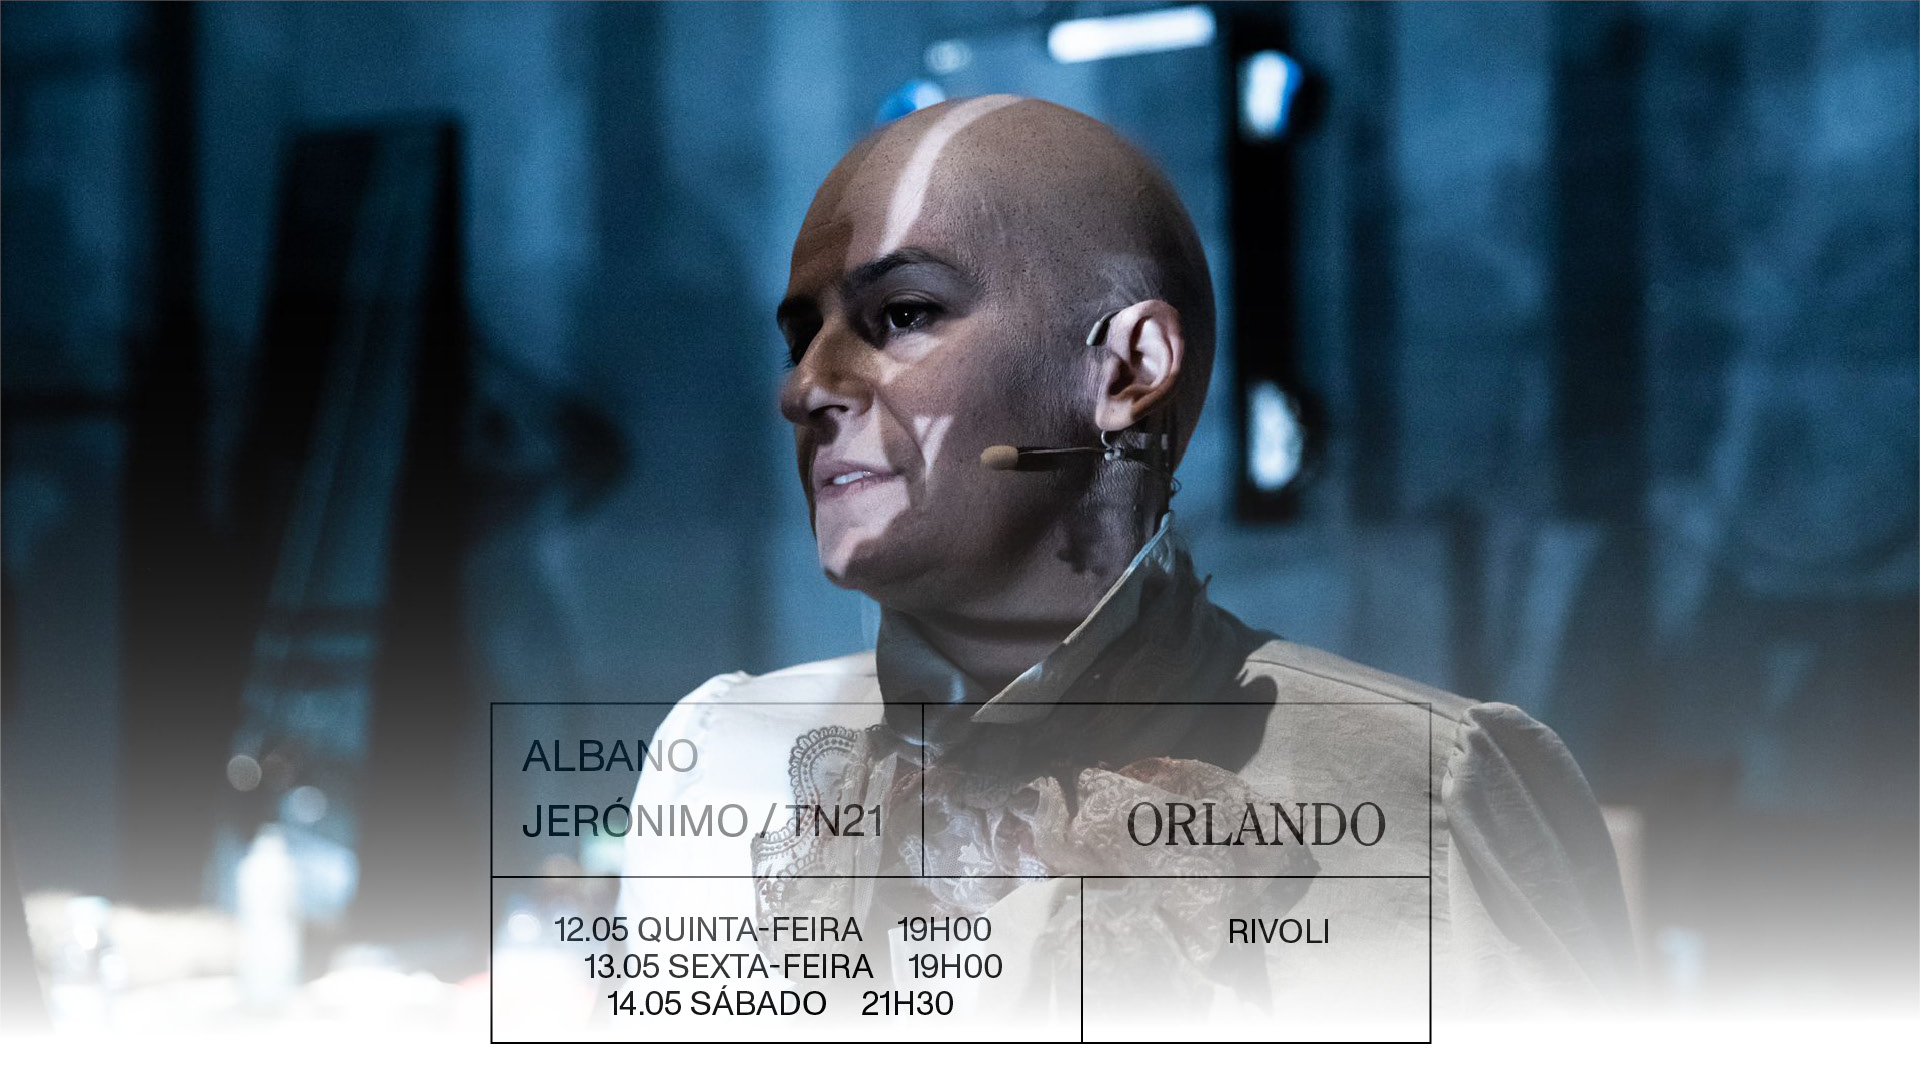 Orlando • ALBANO JERÓNIMO / TN21 | FITEI 45